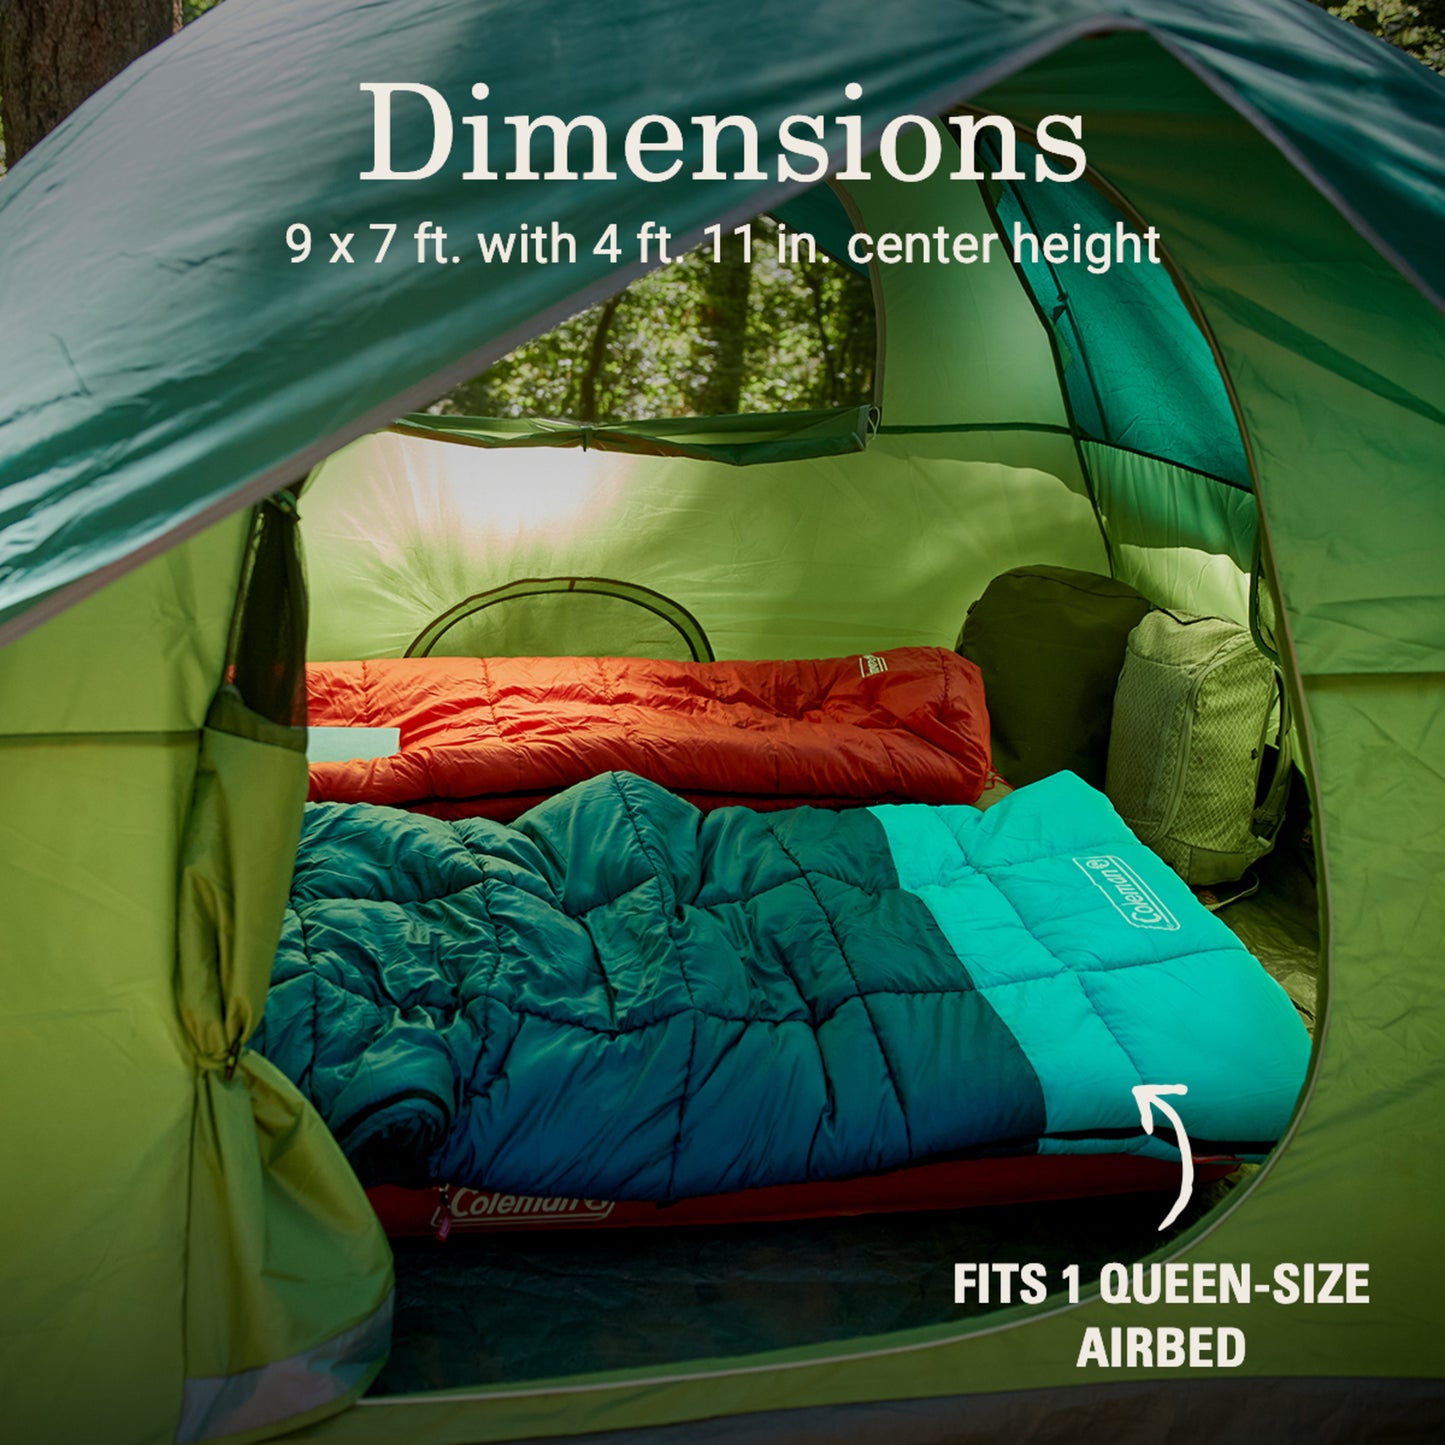 Sundome® 4-Person Camping Tent